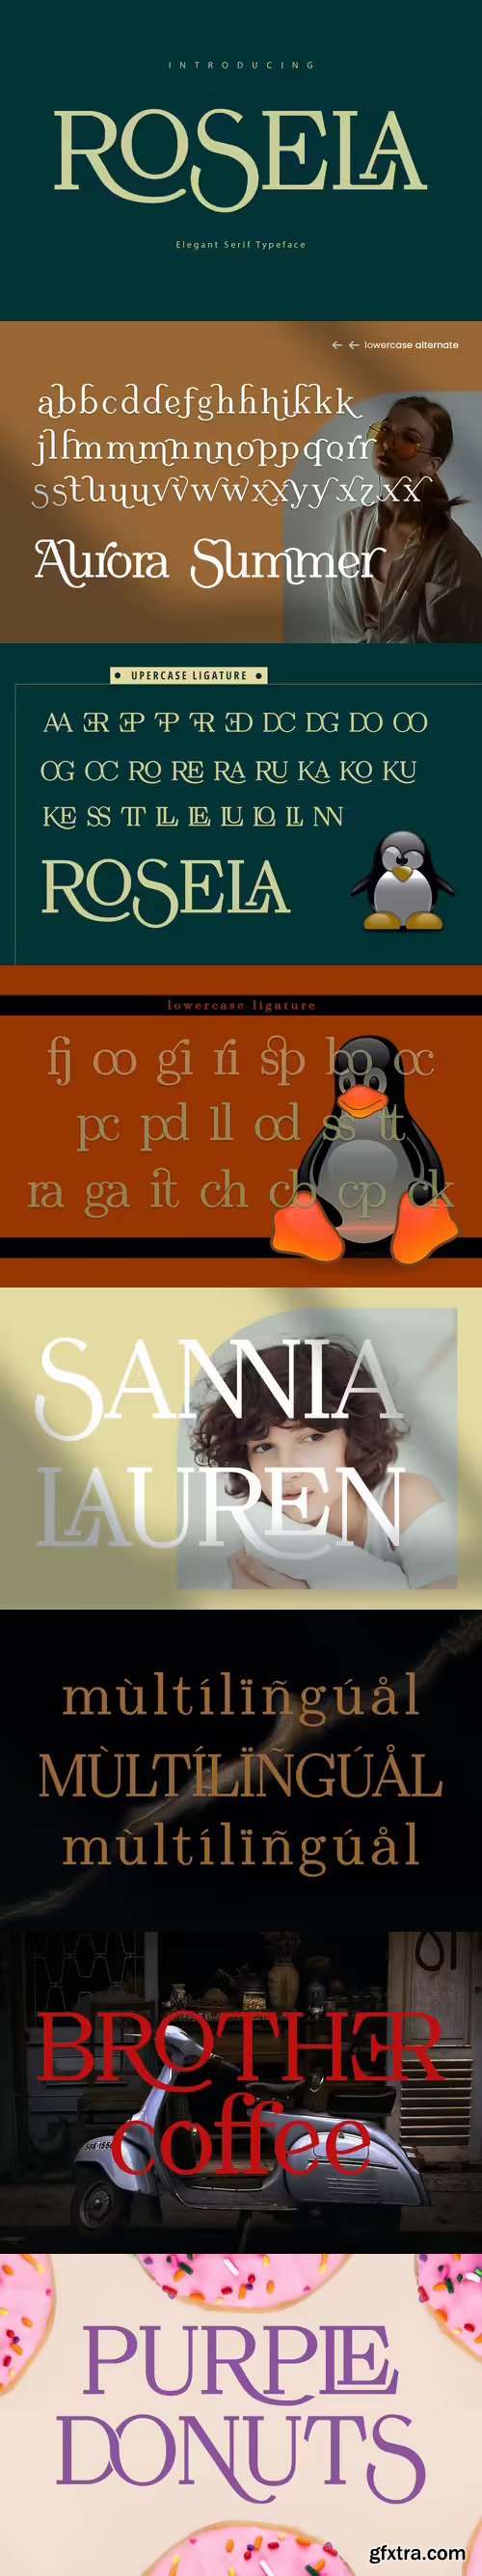 Rosela Elegant Serif Typeface